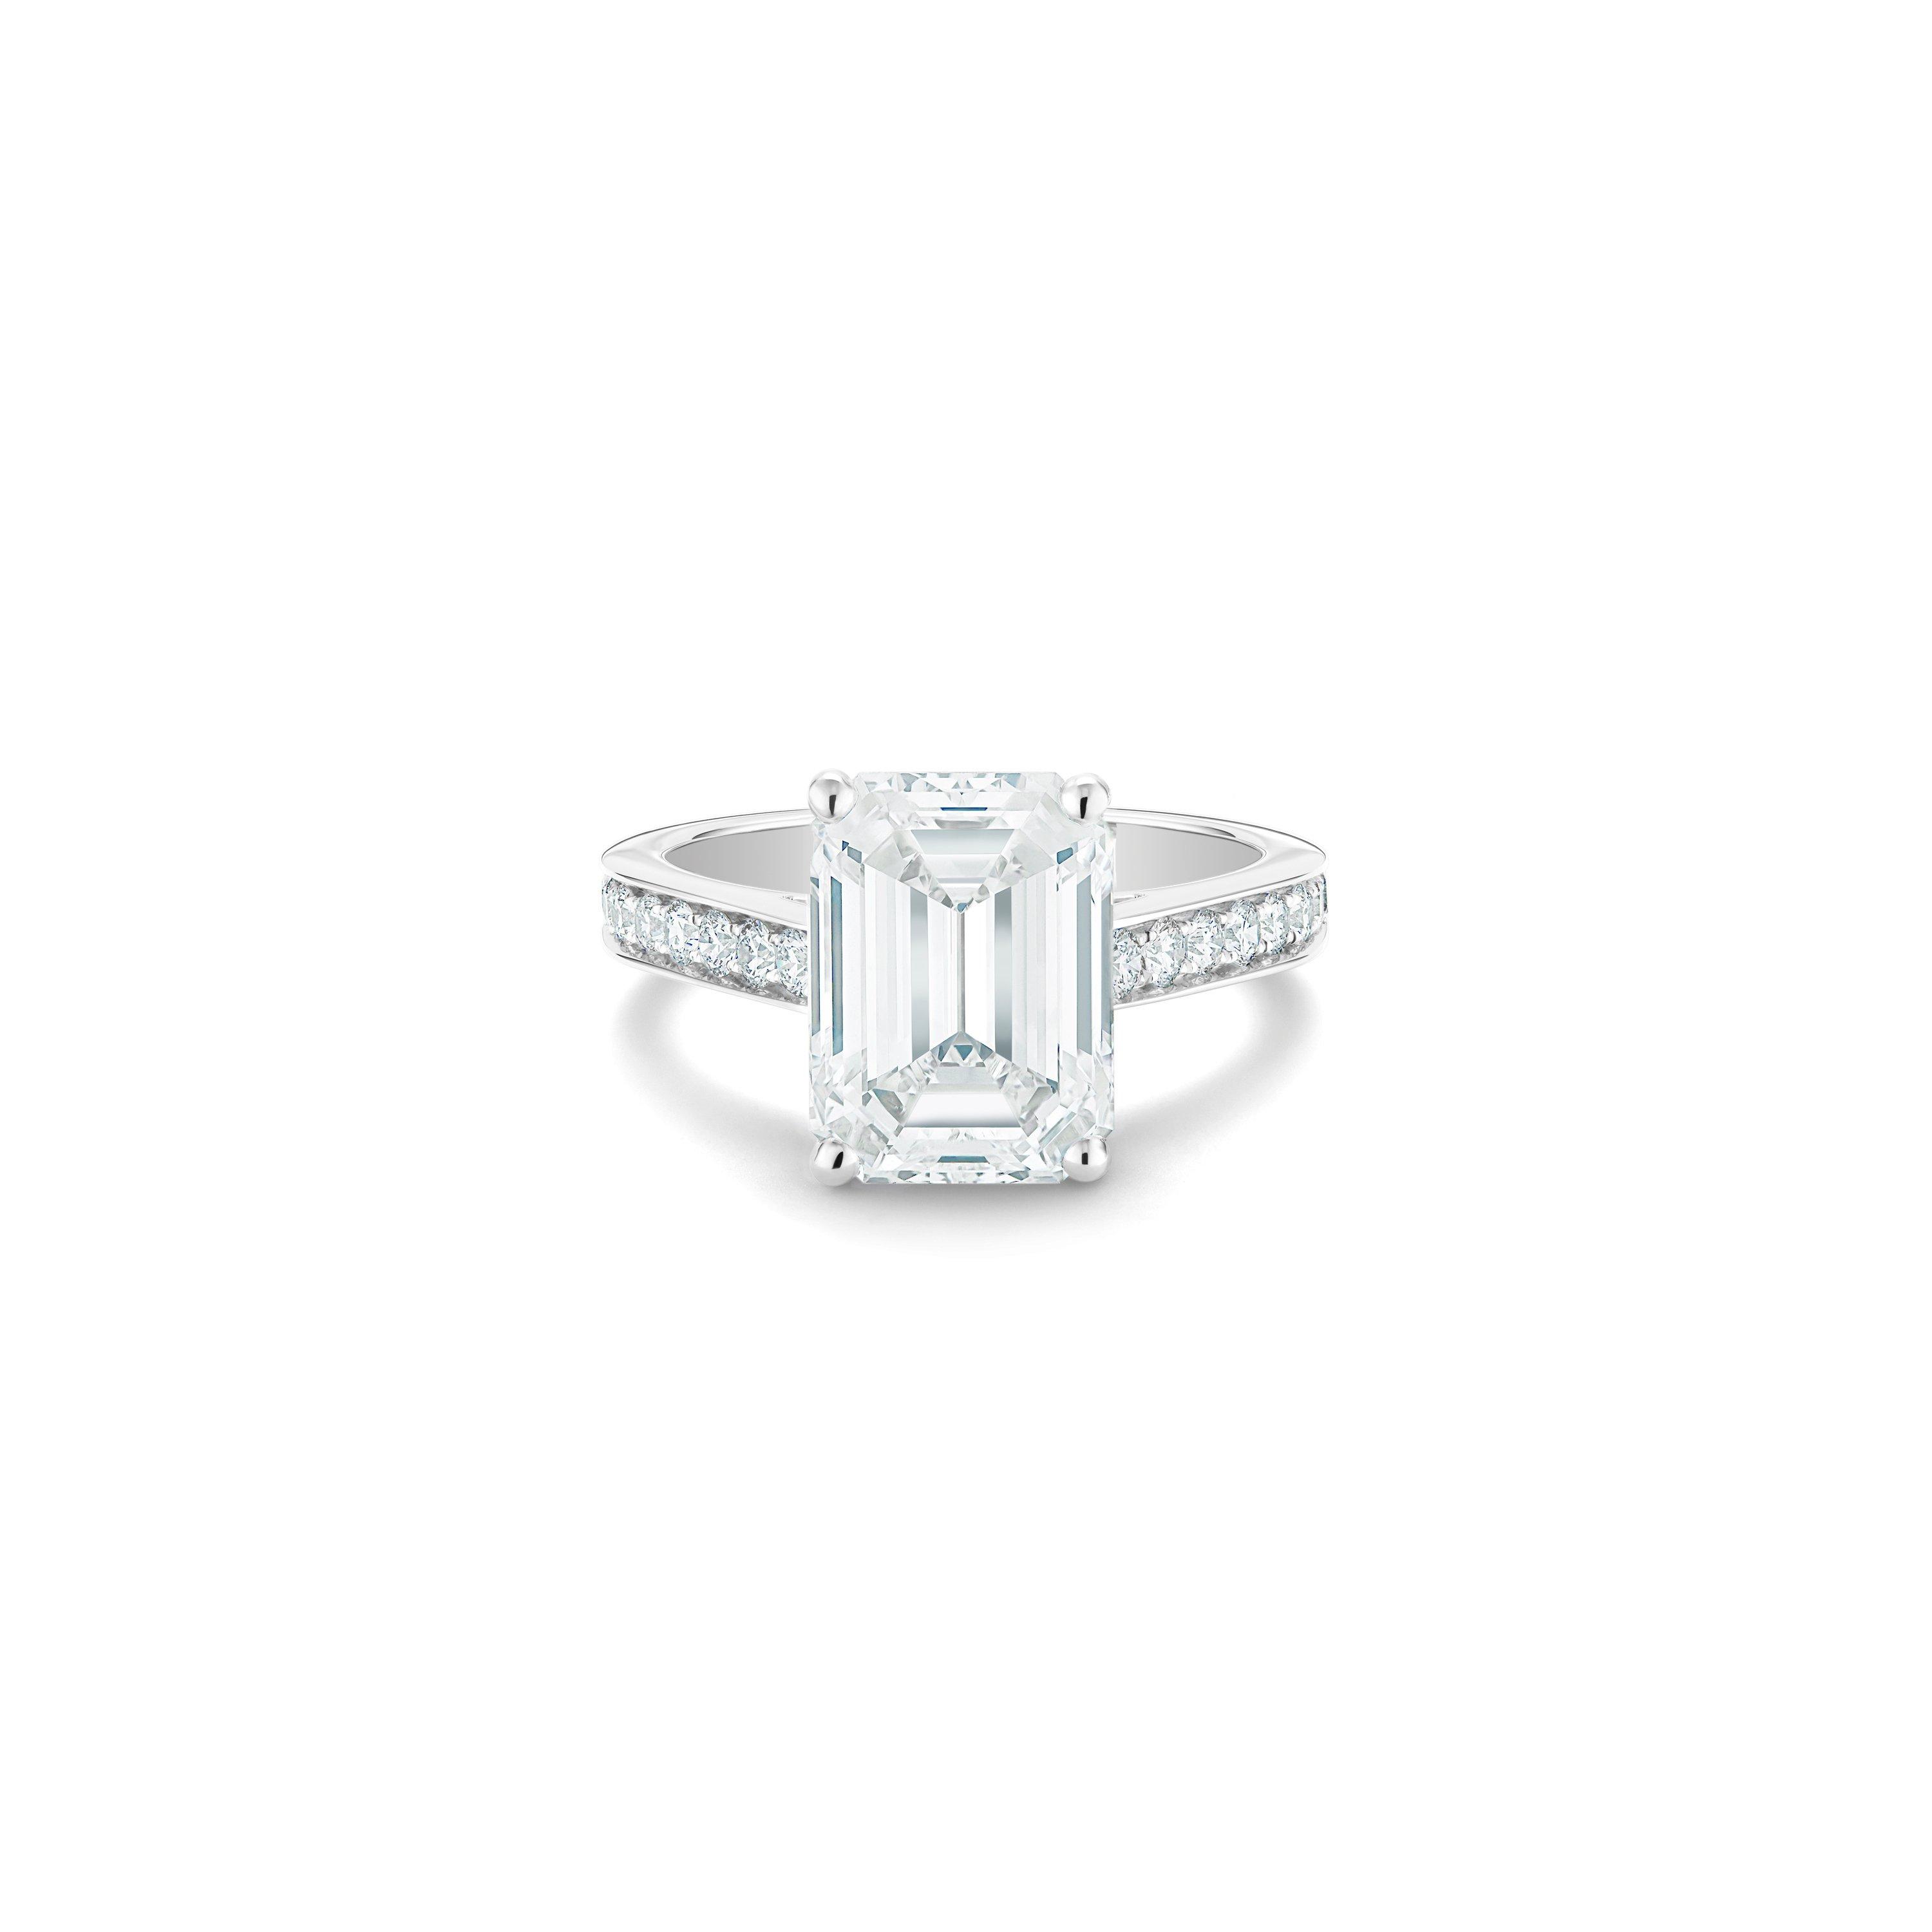 Old Bond Street emerald-cut diamond ring